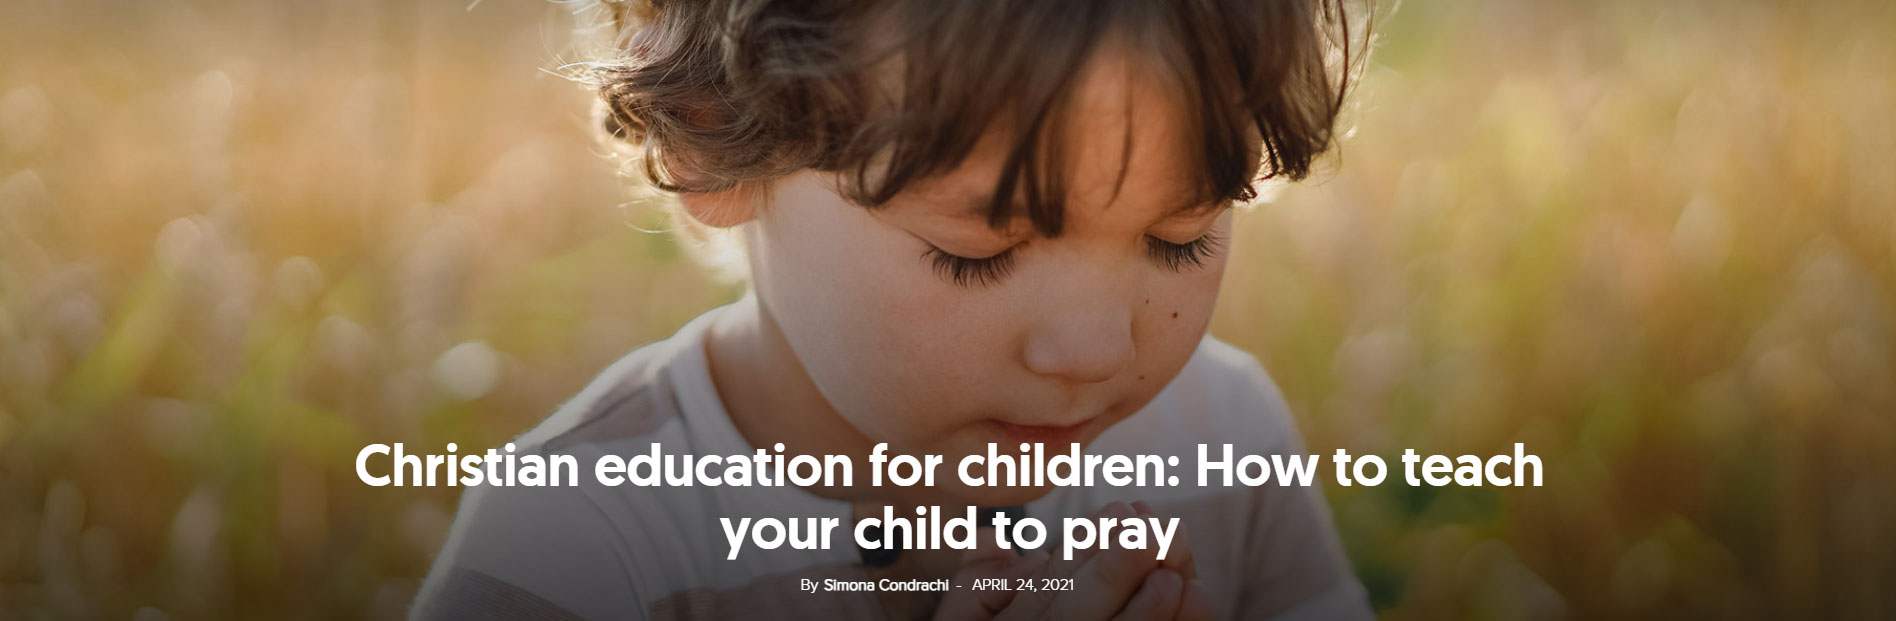 children education pray